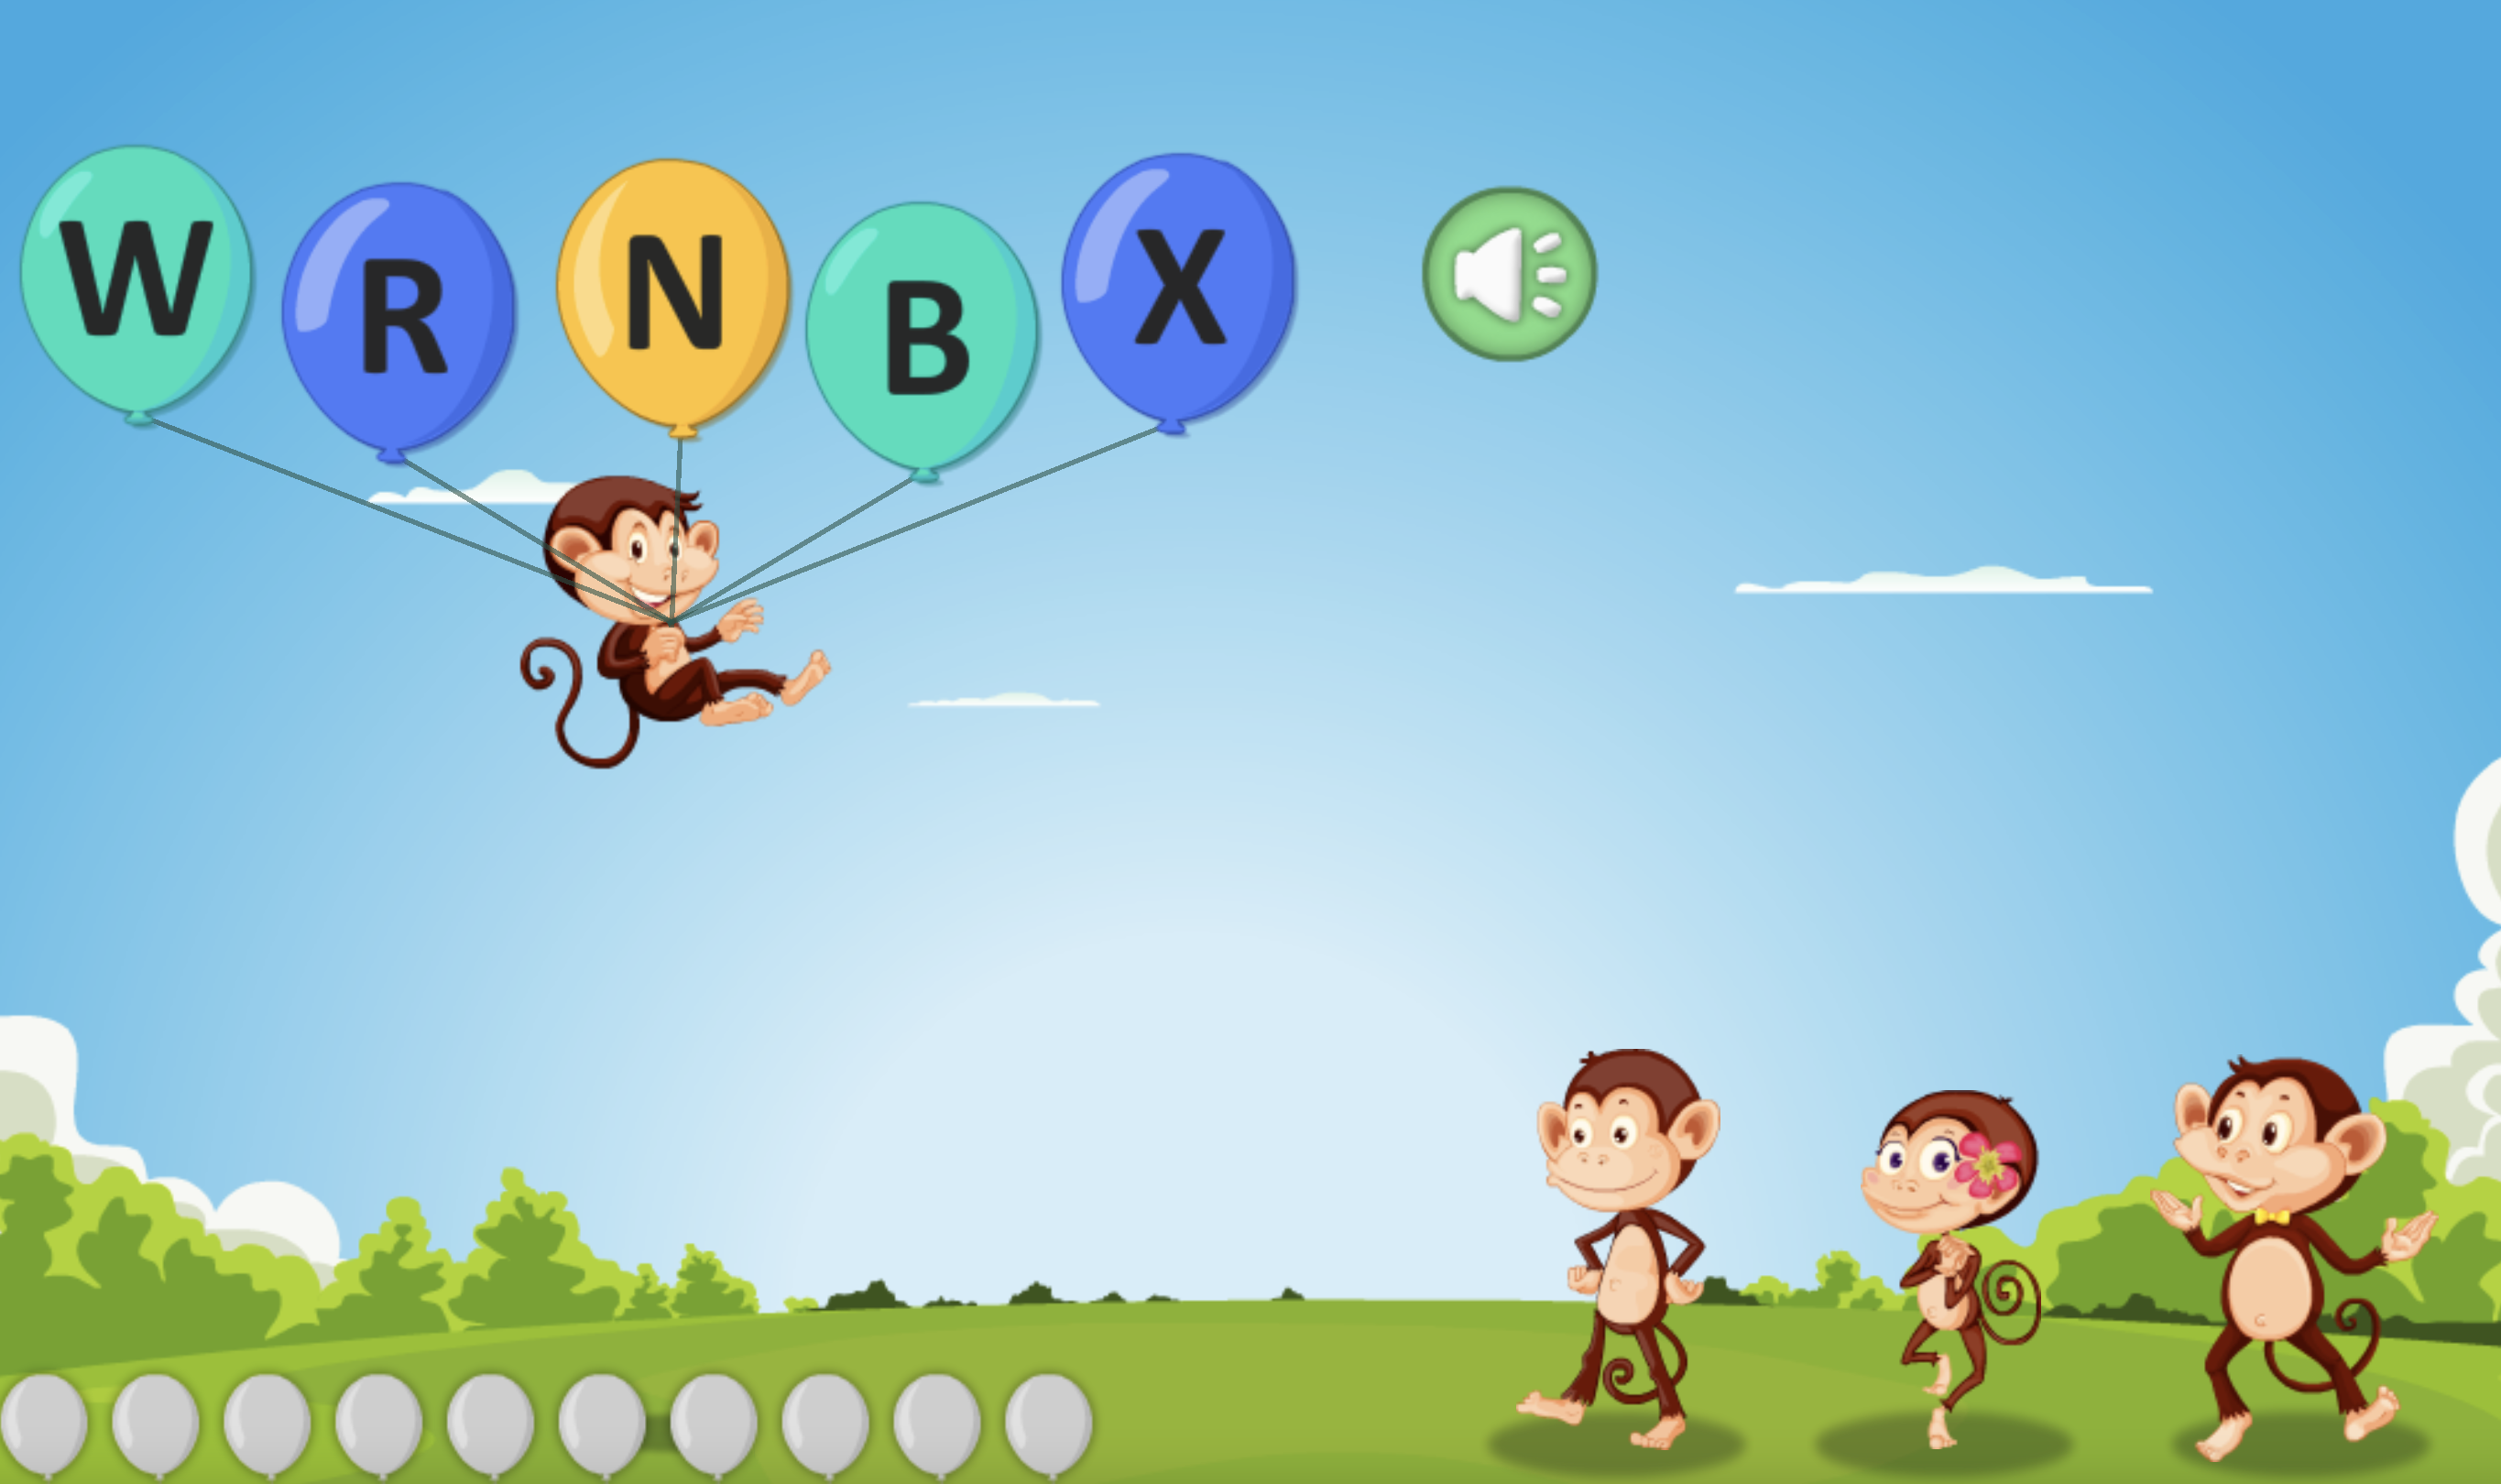 Help the monkeys choose the correct letter balloons